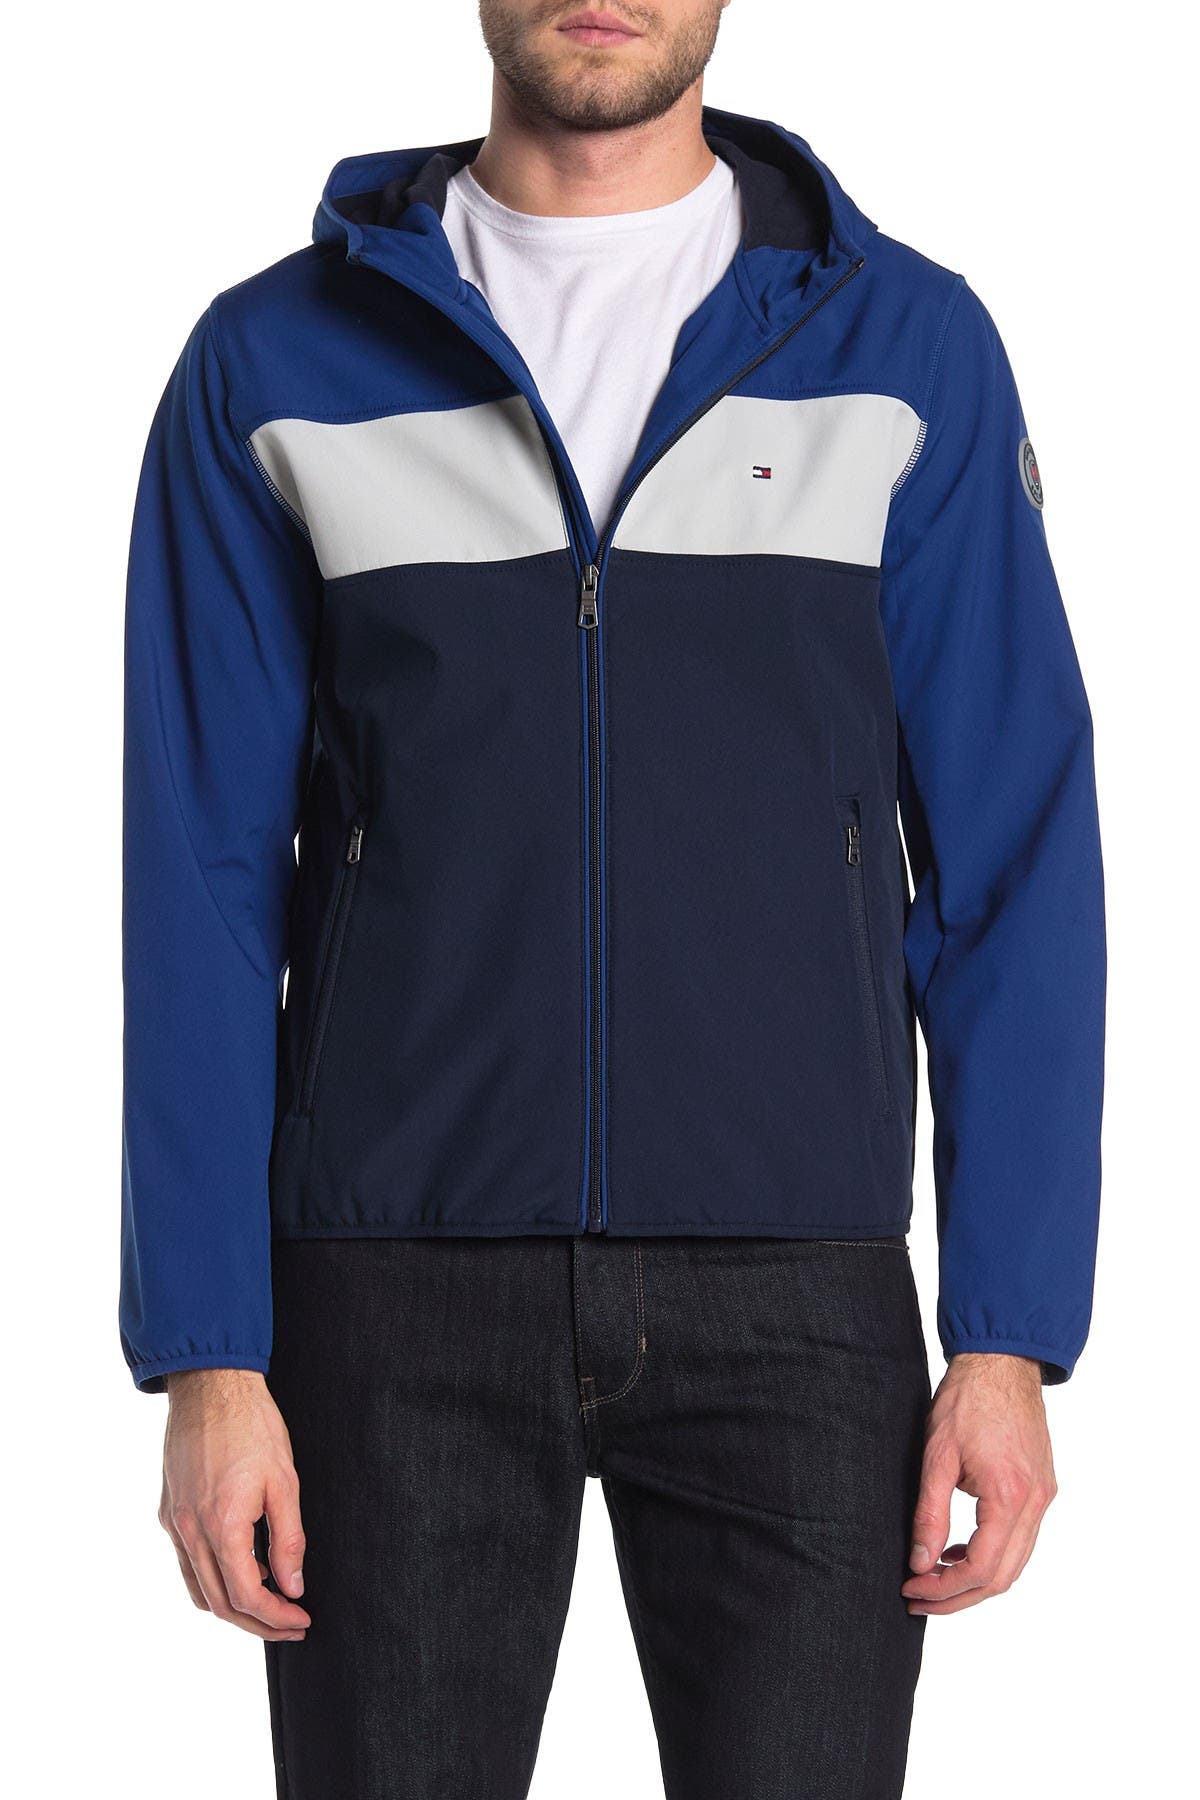 tommy hilfiger men's hooded performance soft shell jacket